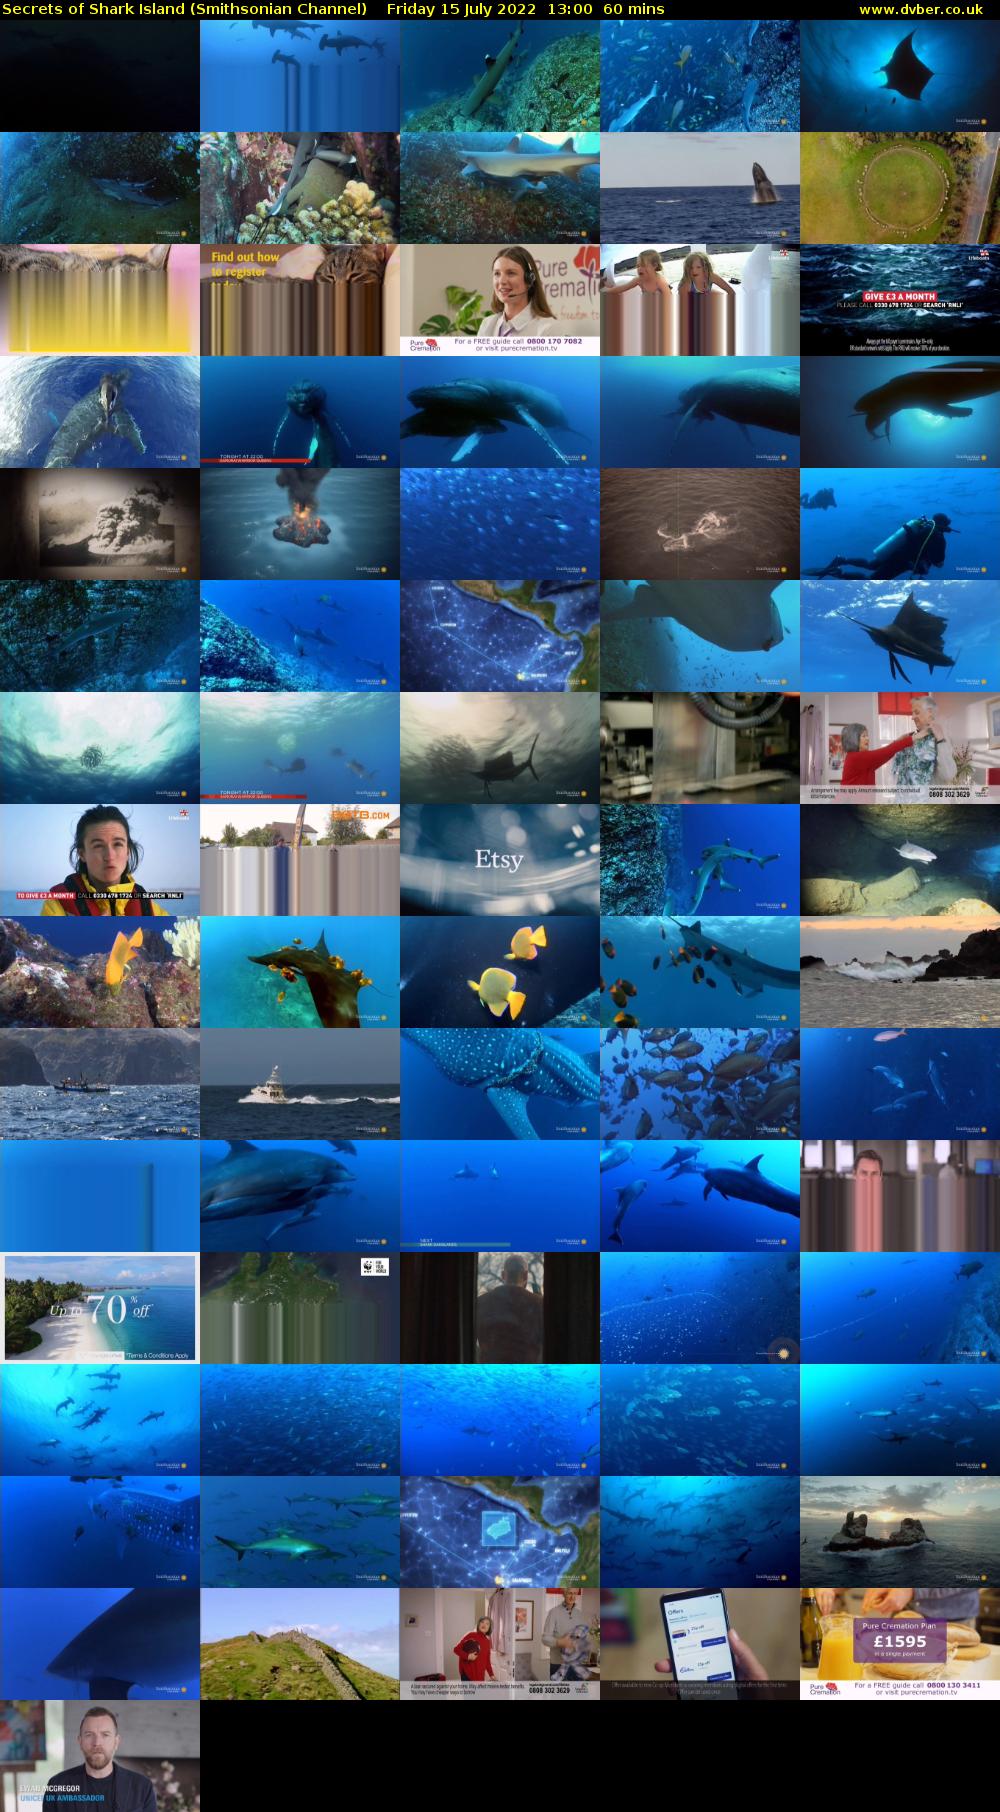 Secrets of Shark Island (Smithsonian Channel) Friday 15 July 2022 13:00 - 14:00